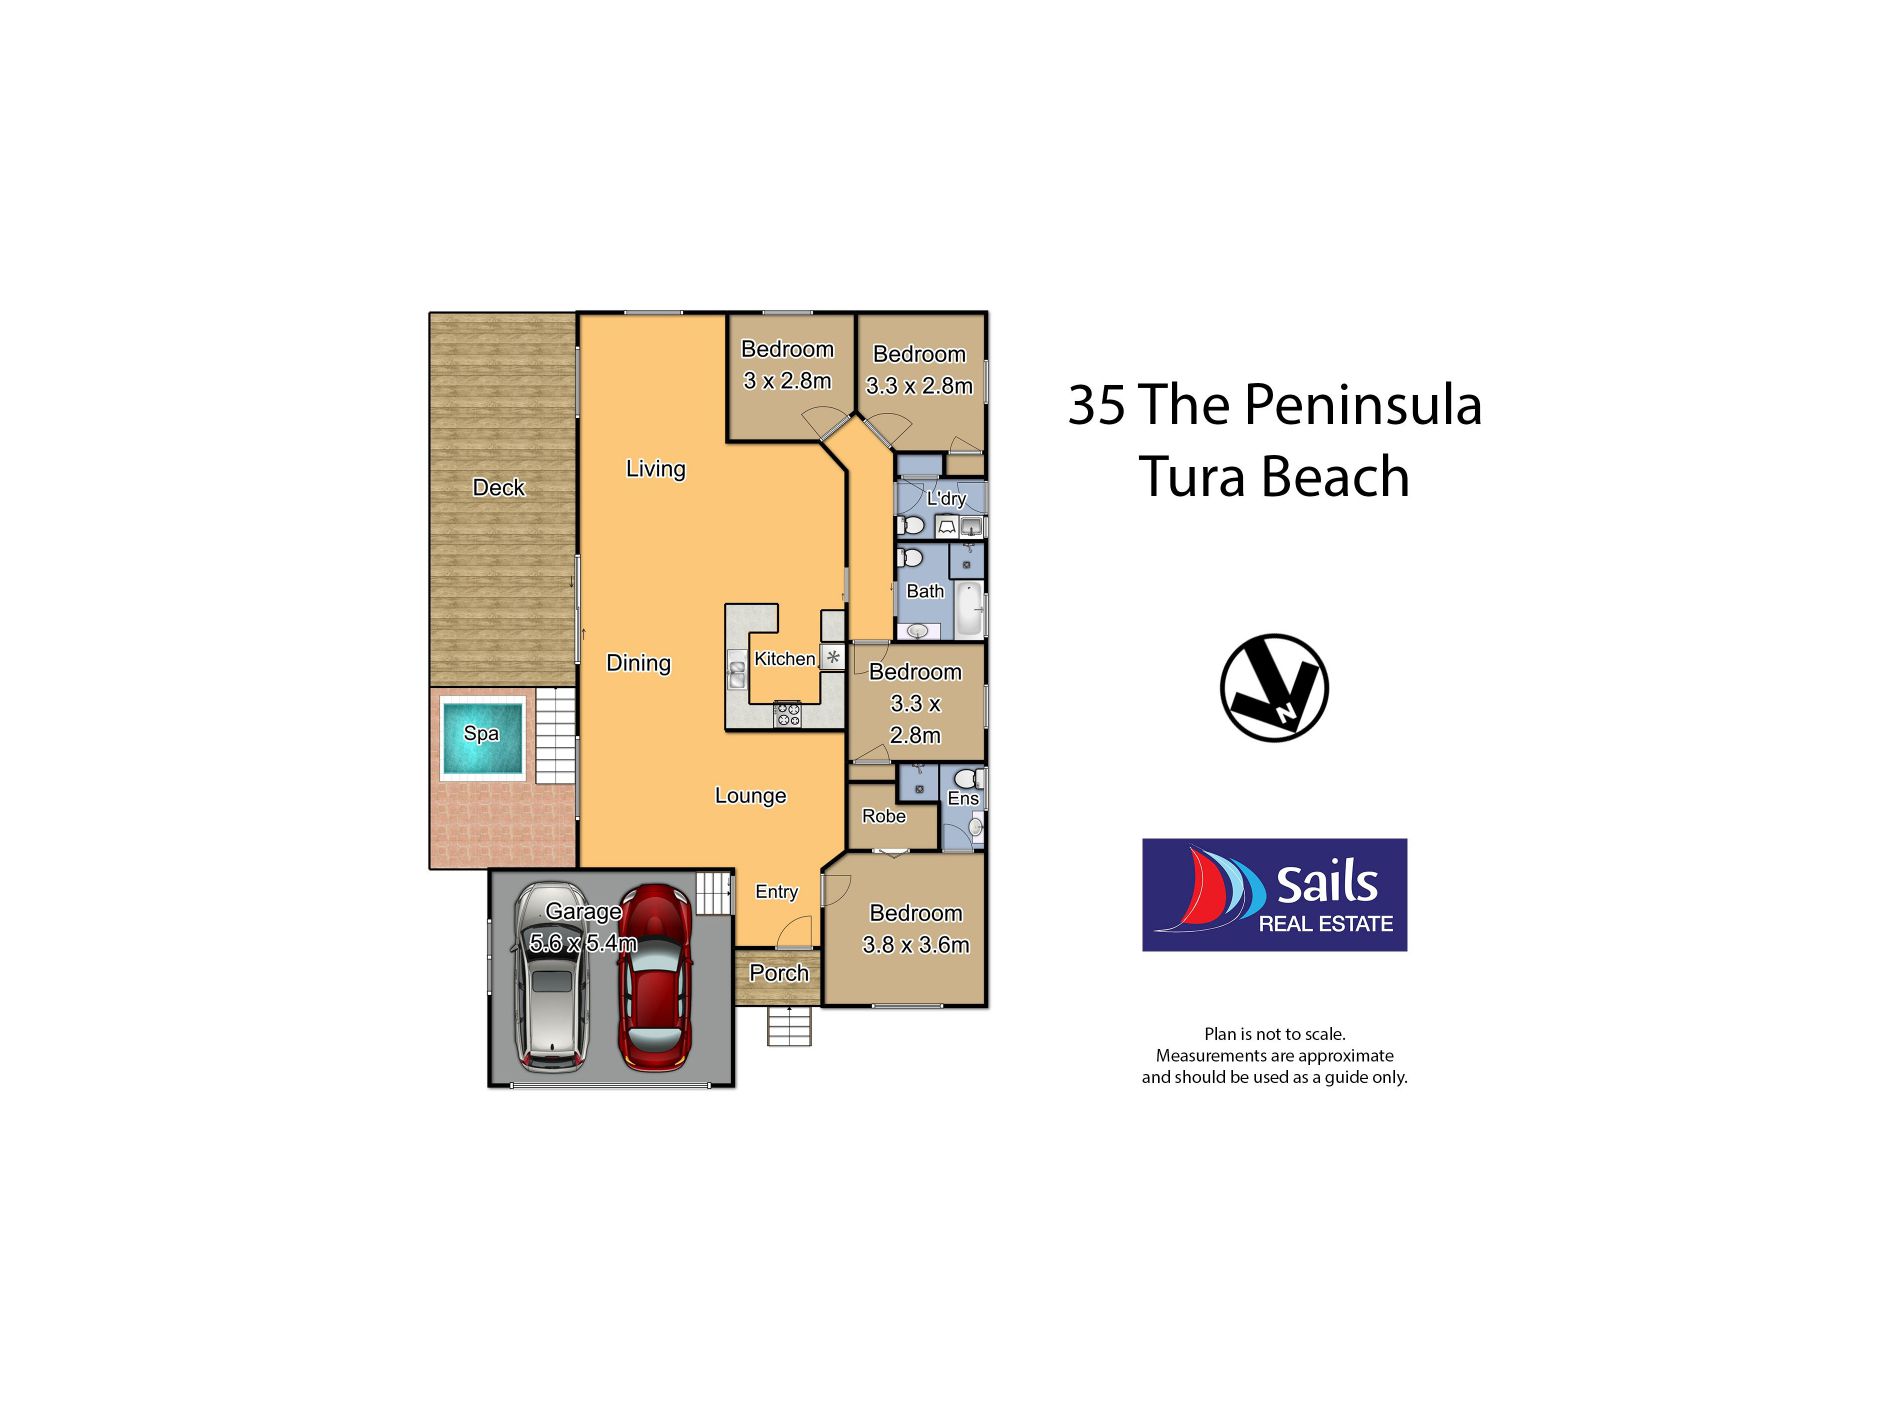 35 The Peninsula, Tura Beach